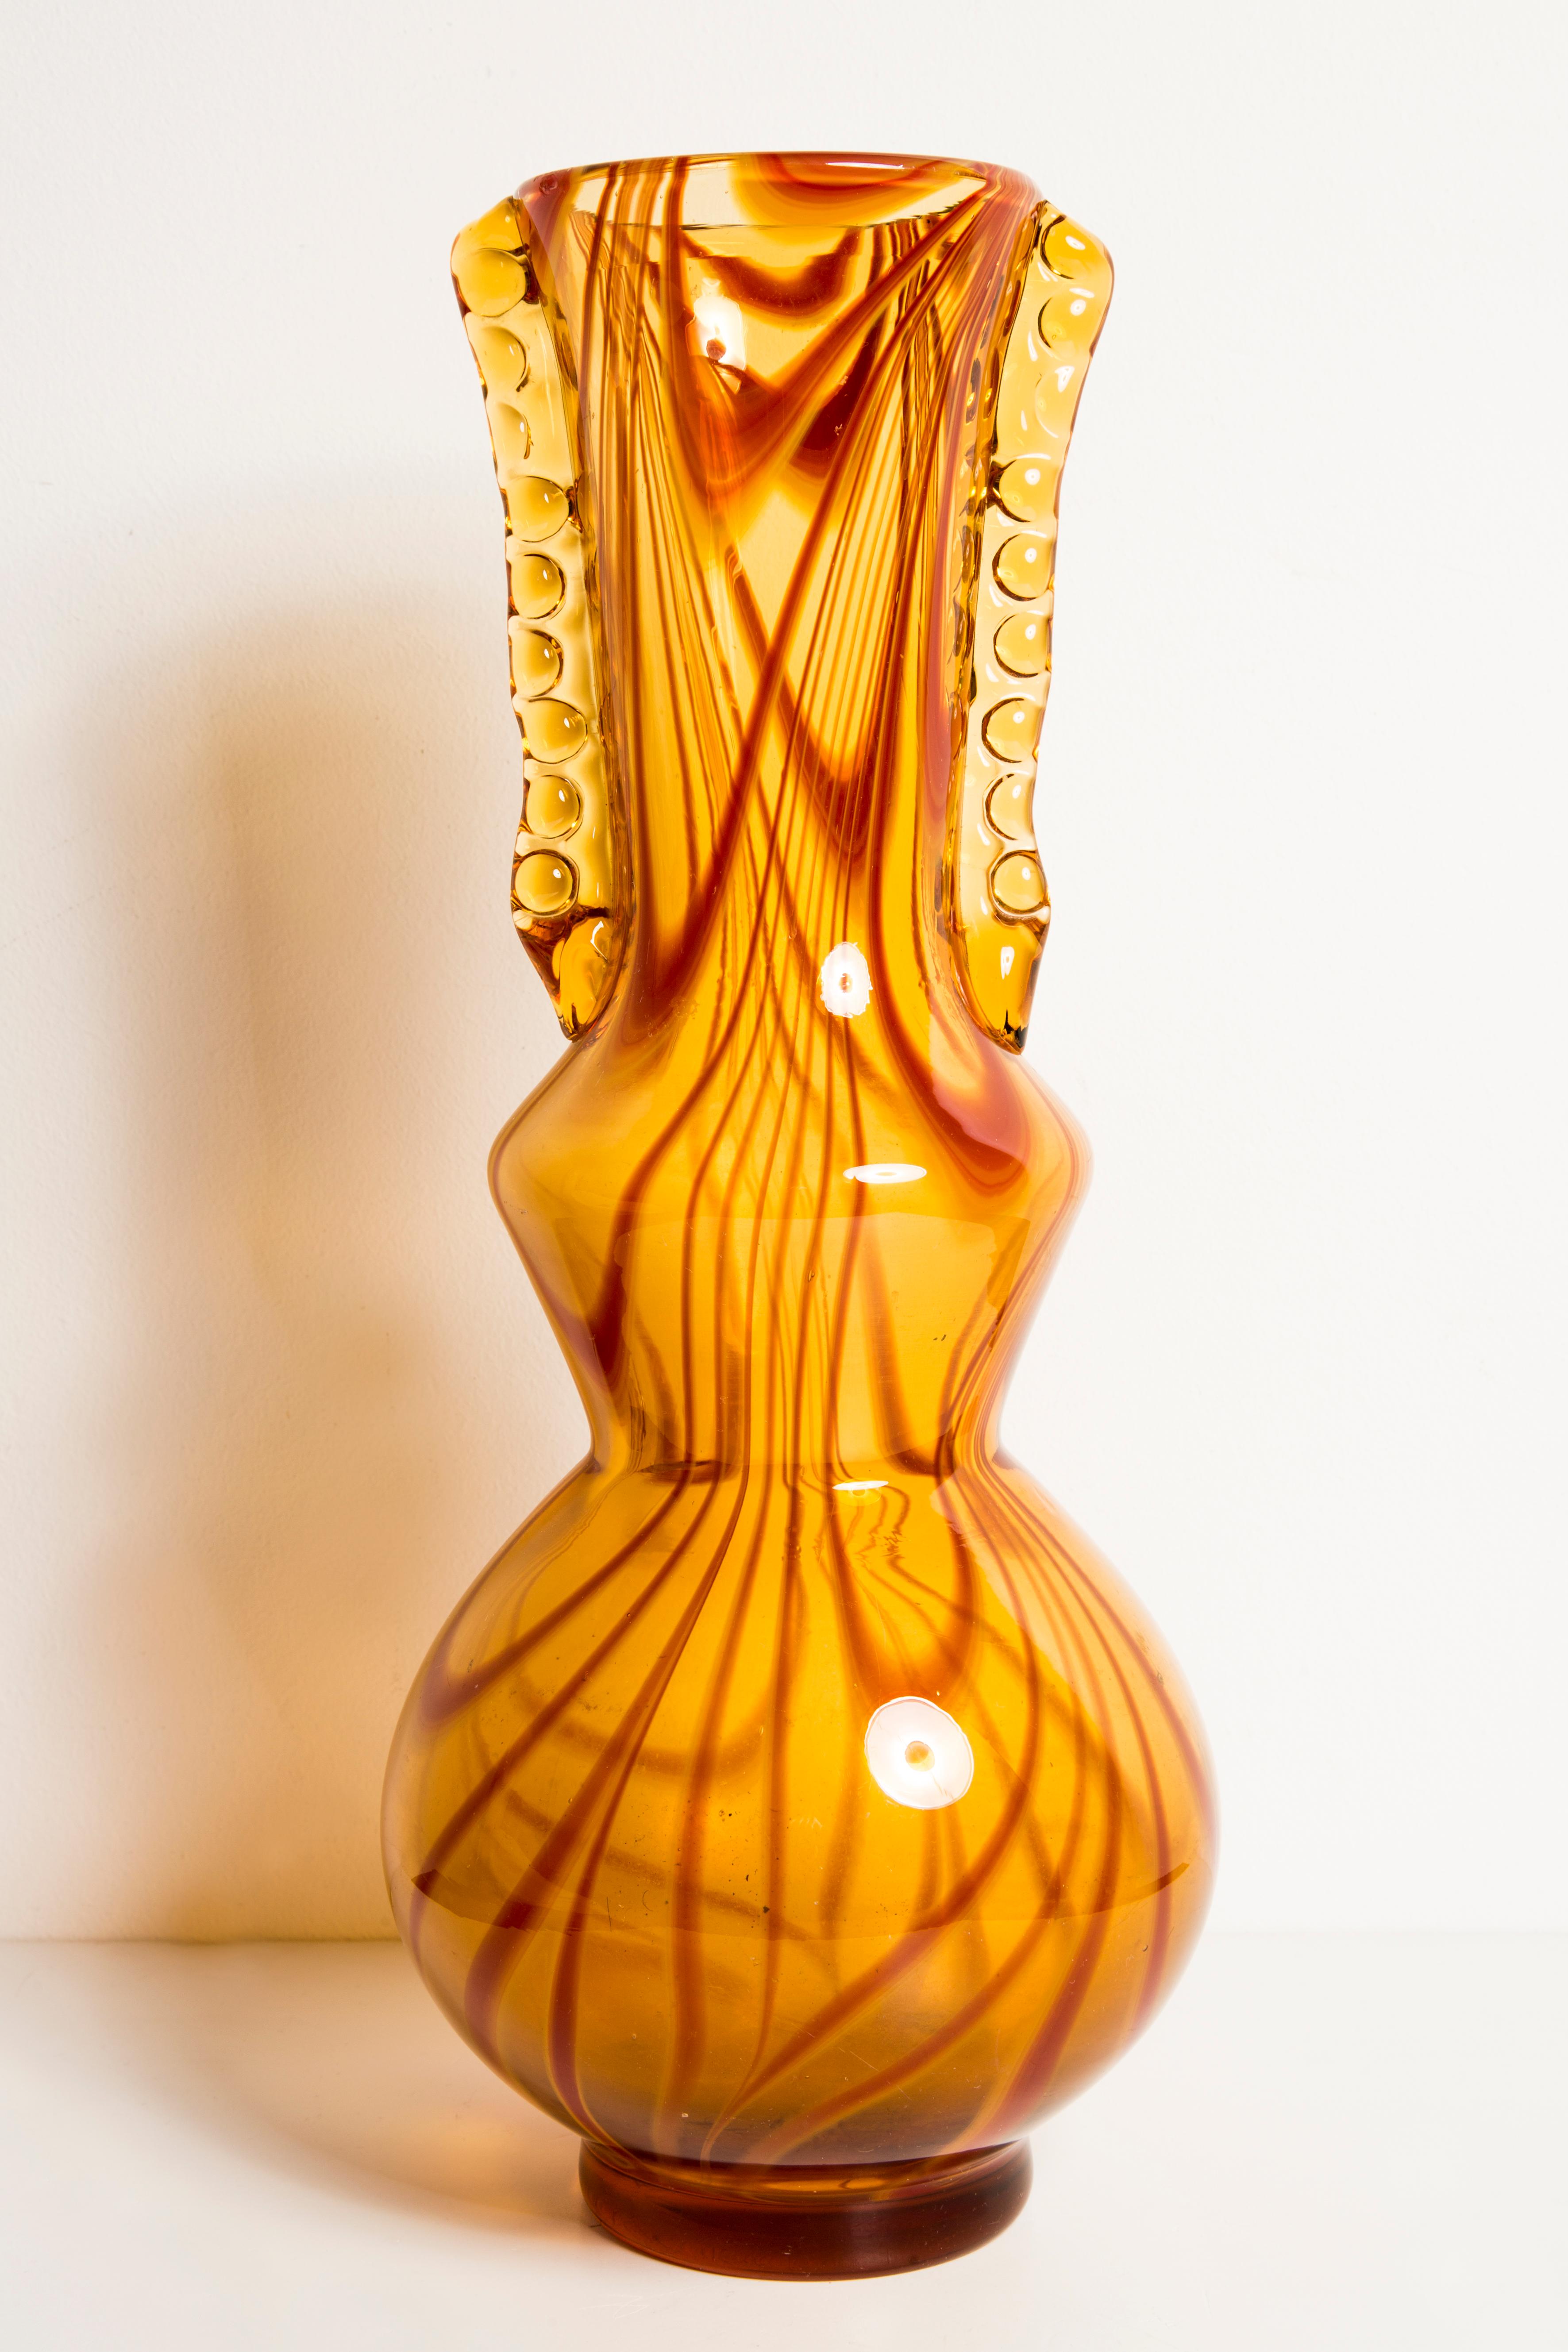 Glass Midcentury Vintage Yellow and Orange Vase, Europe, 1960s For Sale